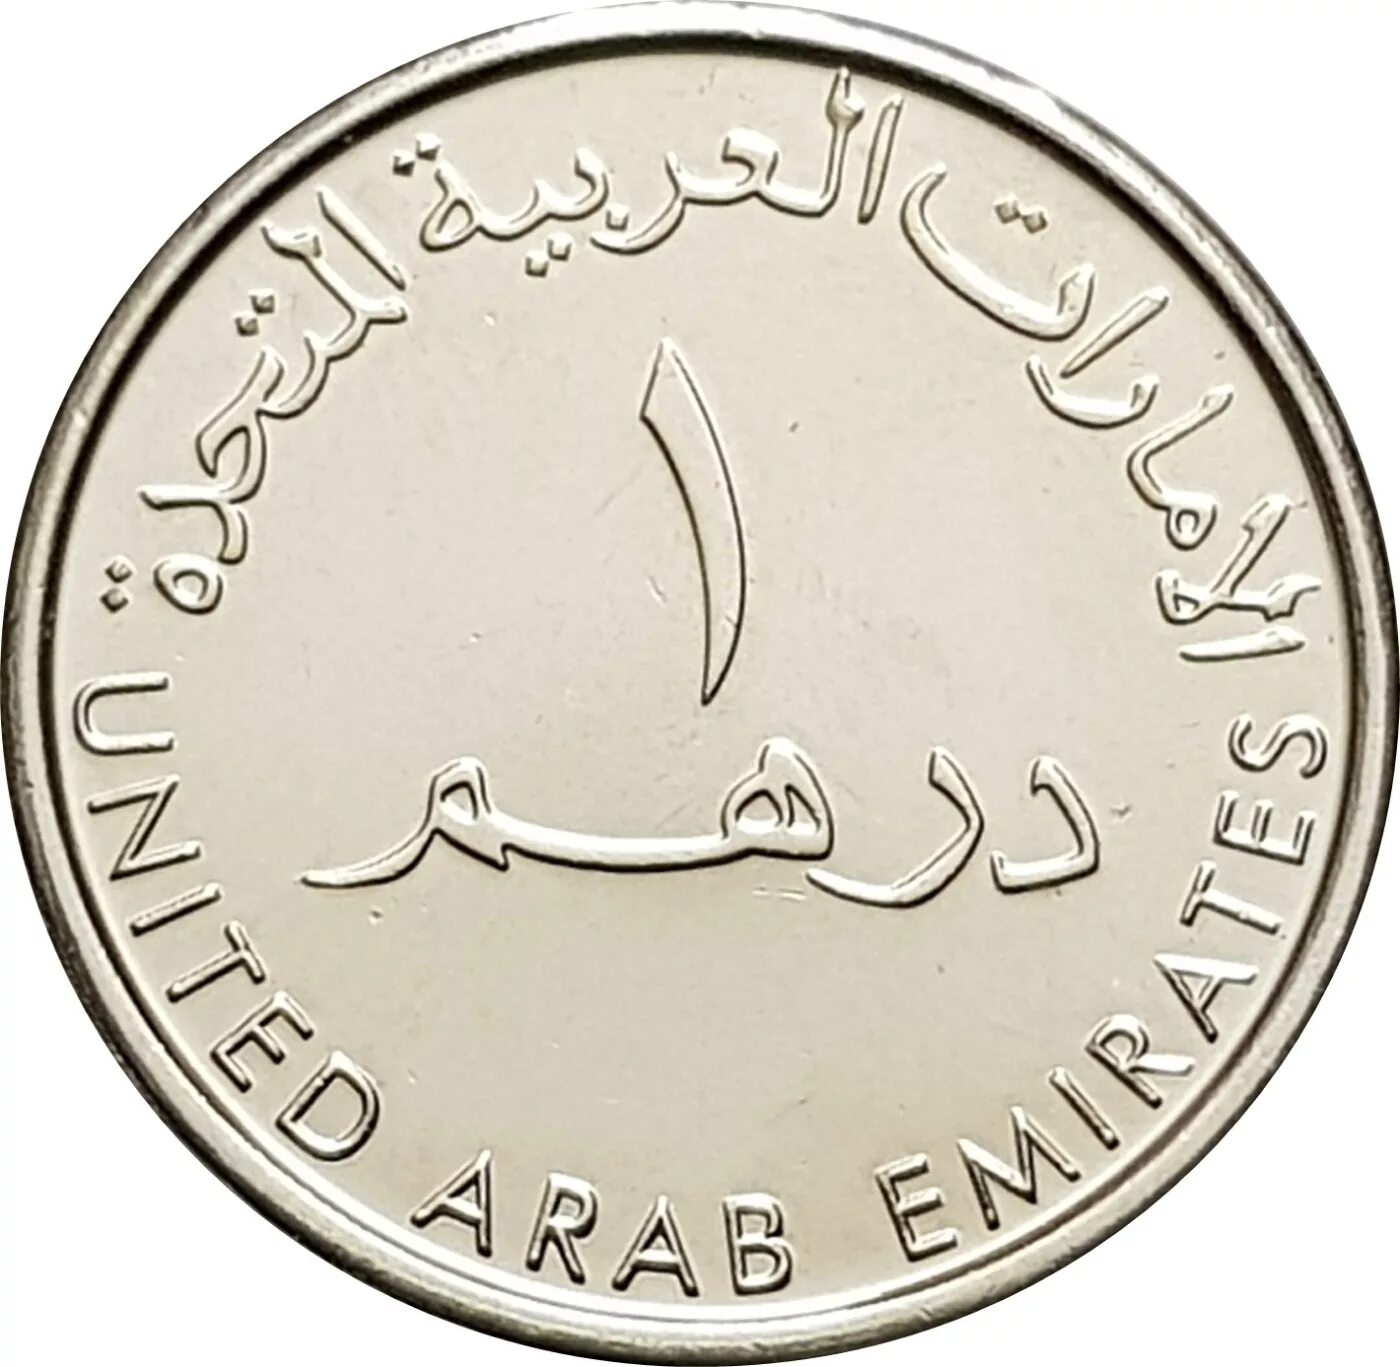 Uae 1. Монета 1 дирхам (ОАЭ) арабские эмираты.. Монета арабская United arab Emirates. Монеты ОАЭ 1 дирхам. Монеты Дубая 1 дирхам.